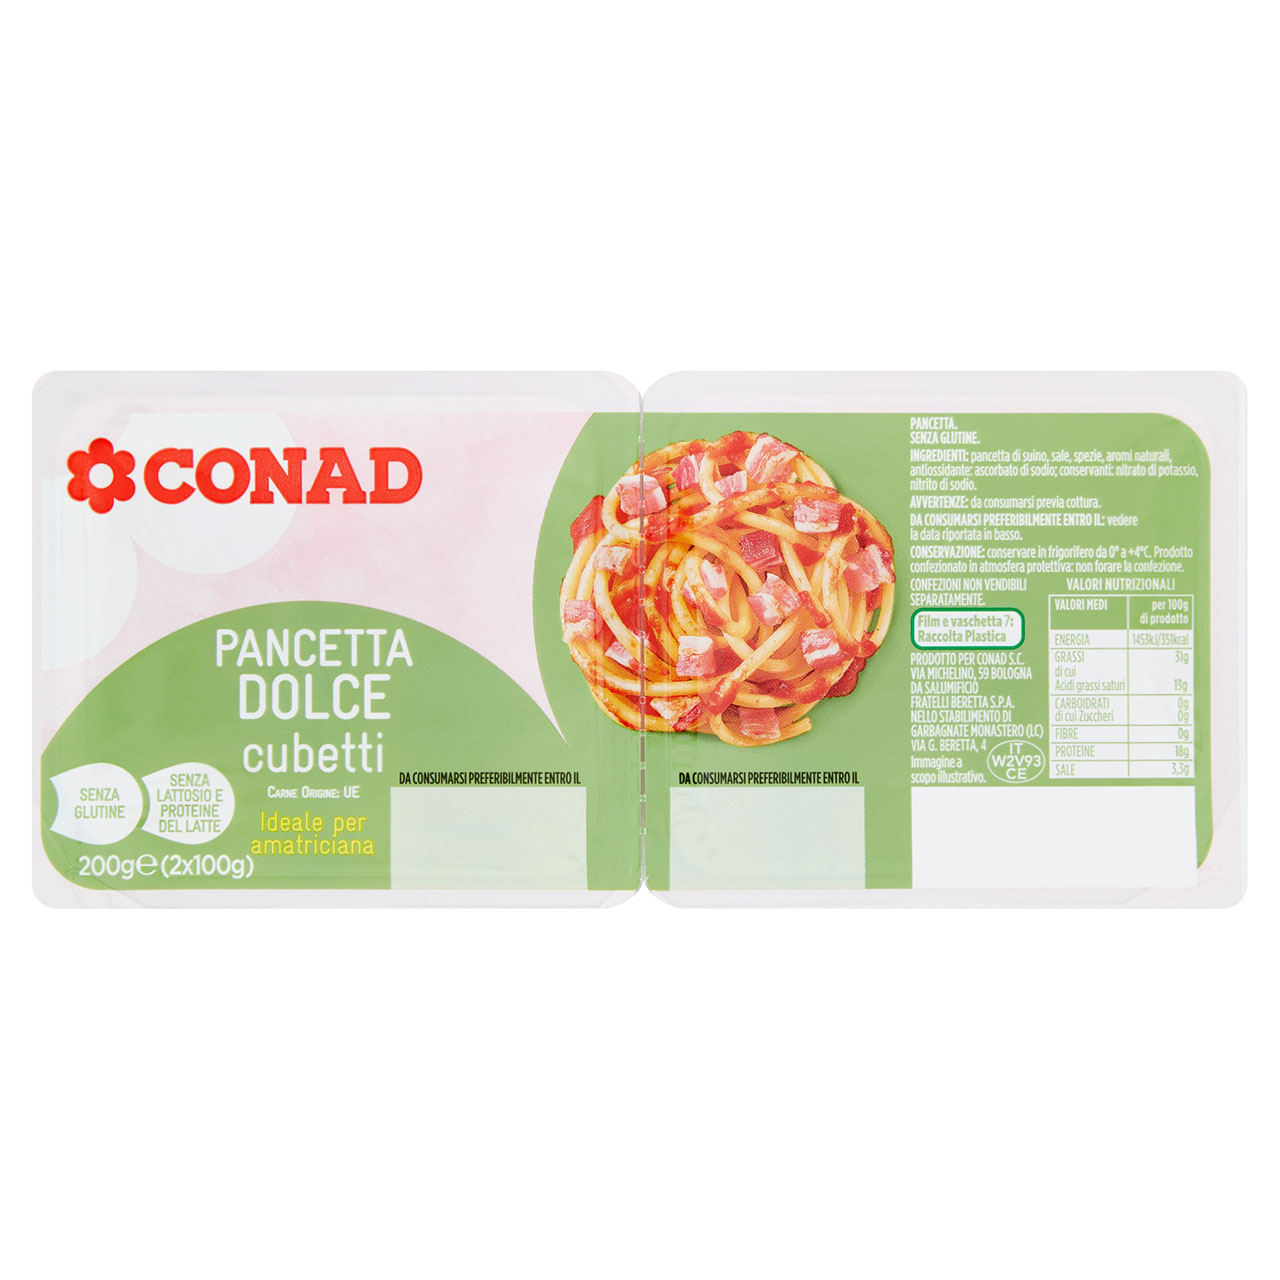 Pancetta Dolce cubetti 2 x 100 g Conad online